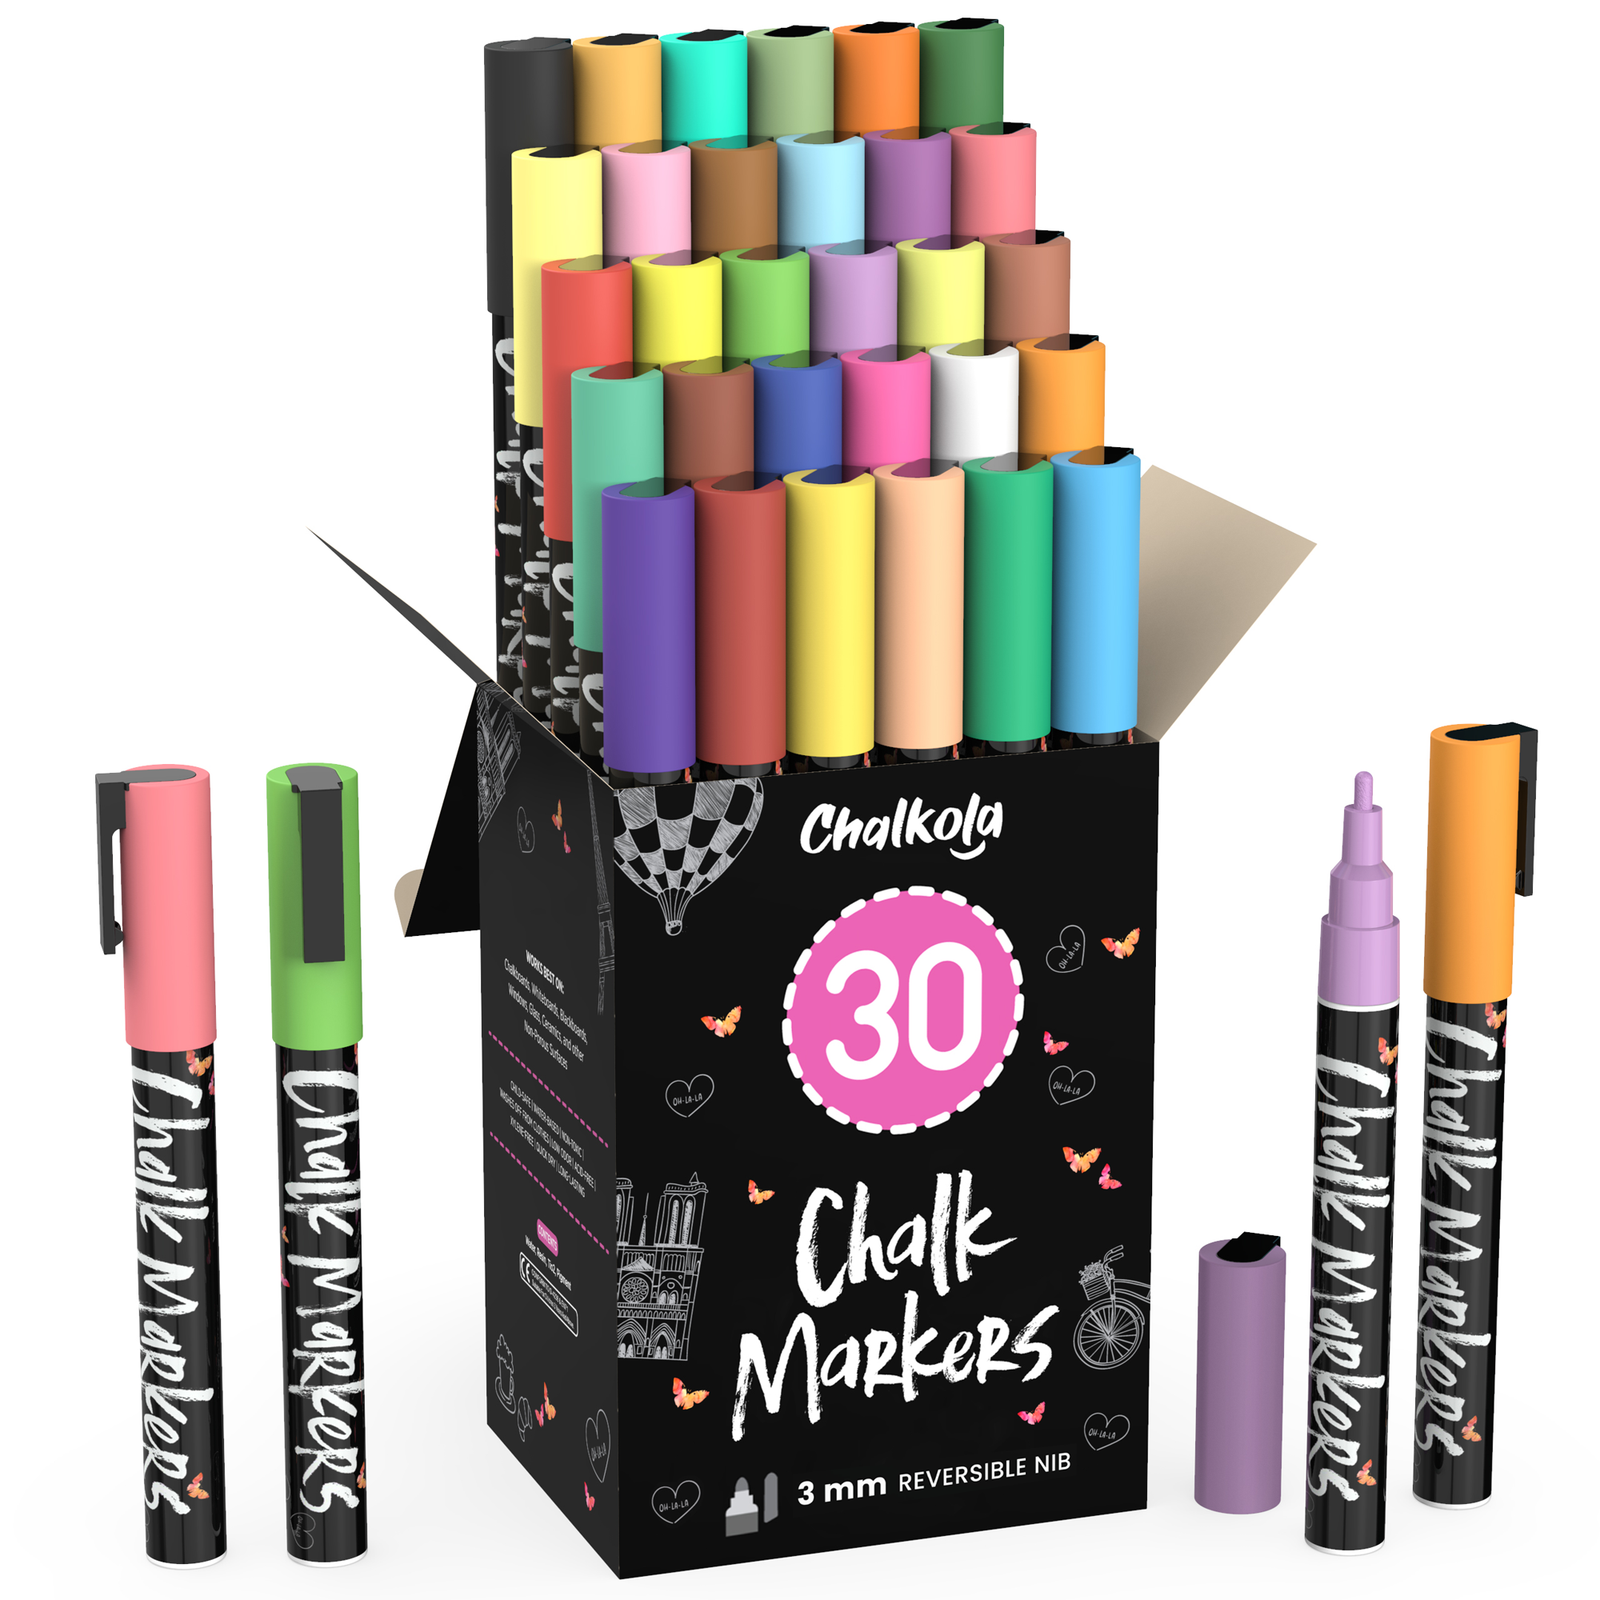 Chalkola chalk pens review + GIVEAWAY - New Mummy Blog